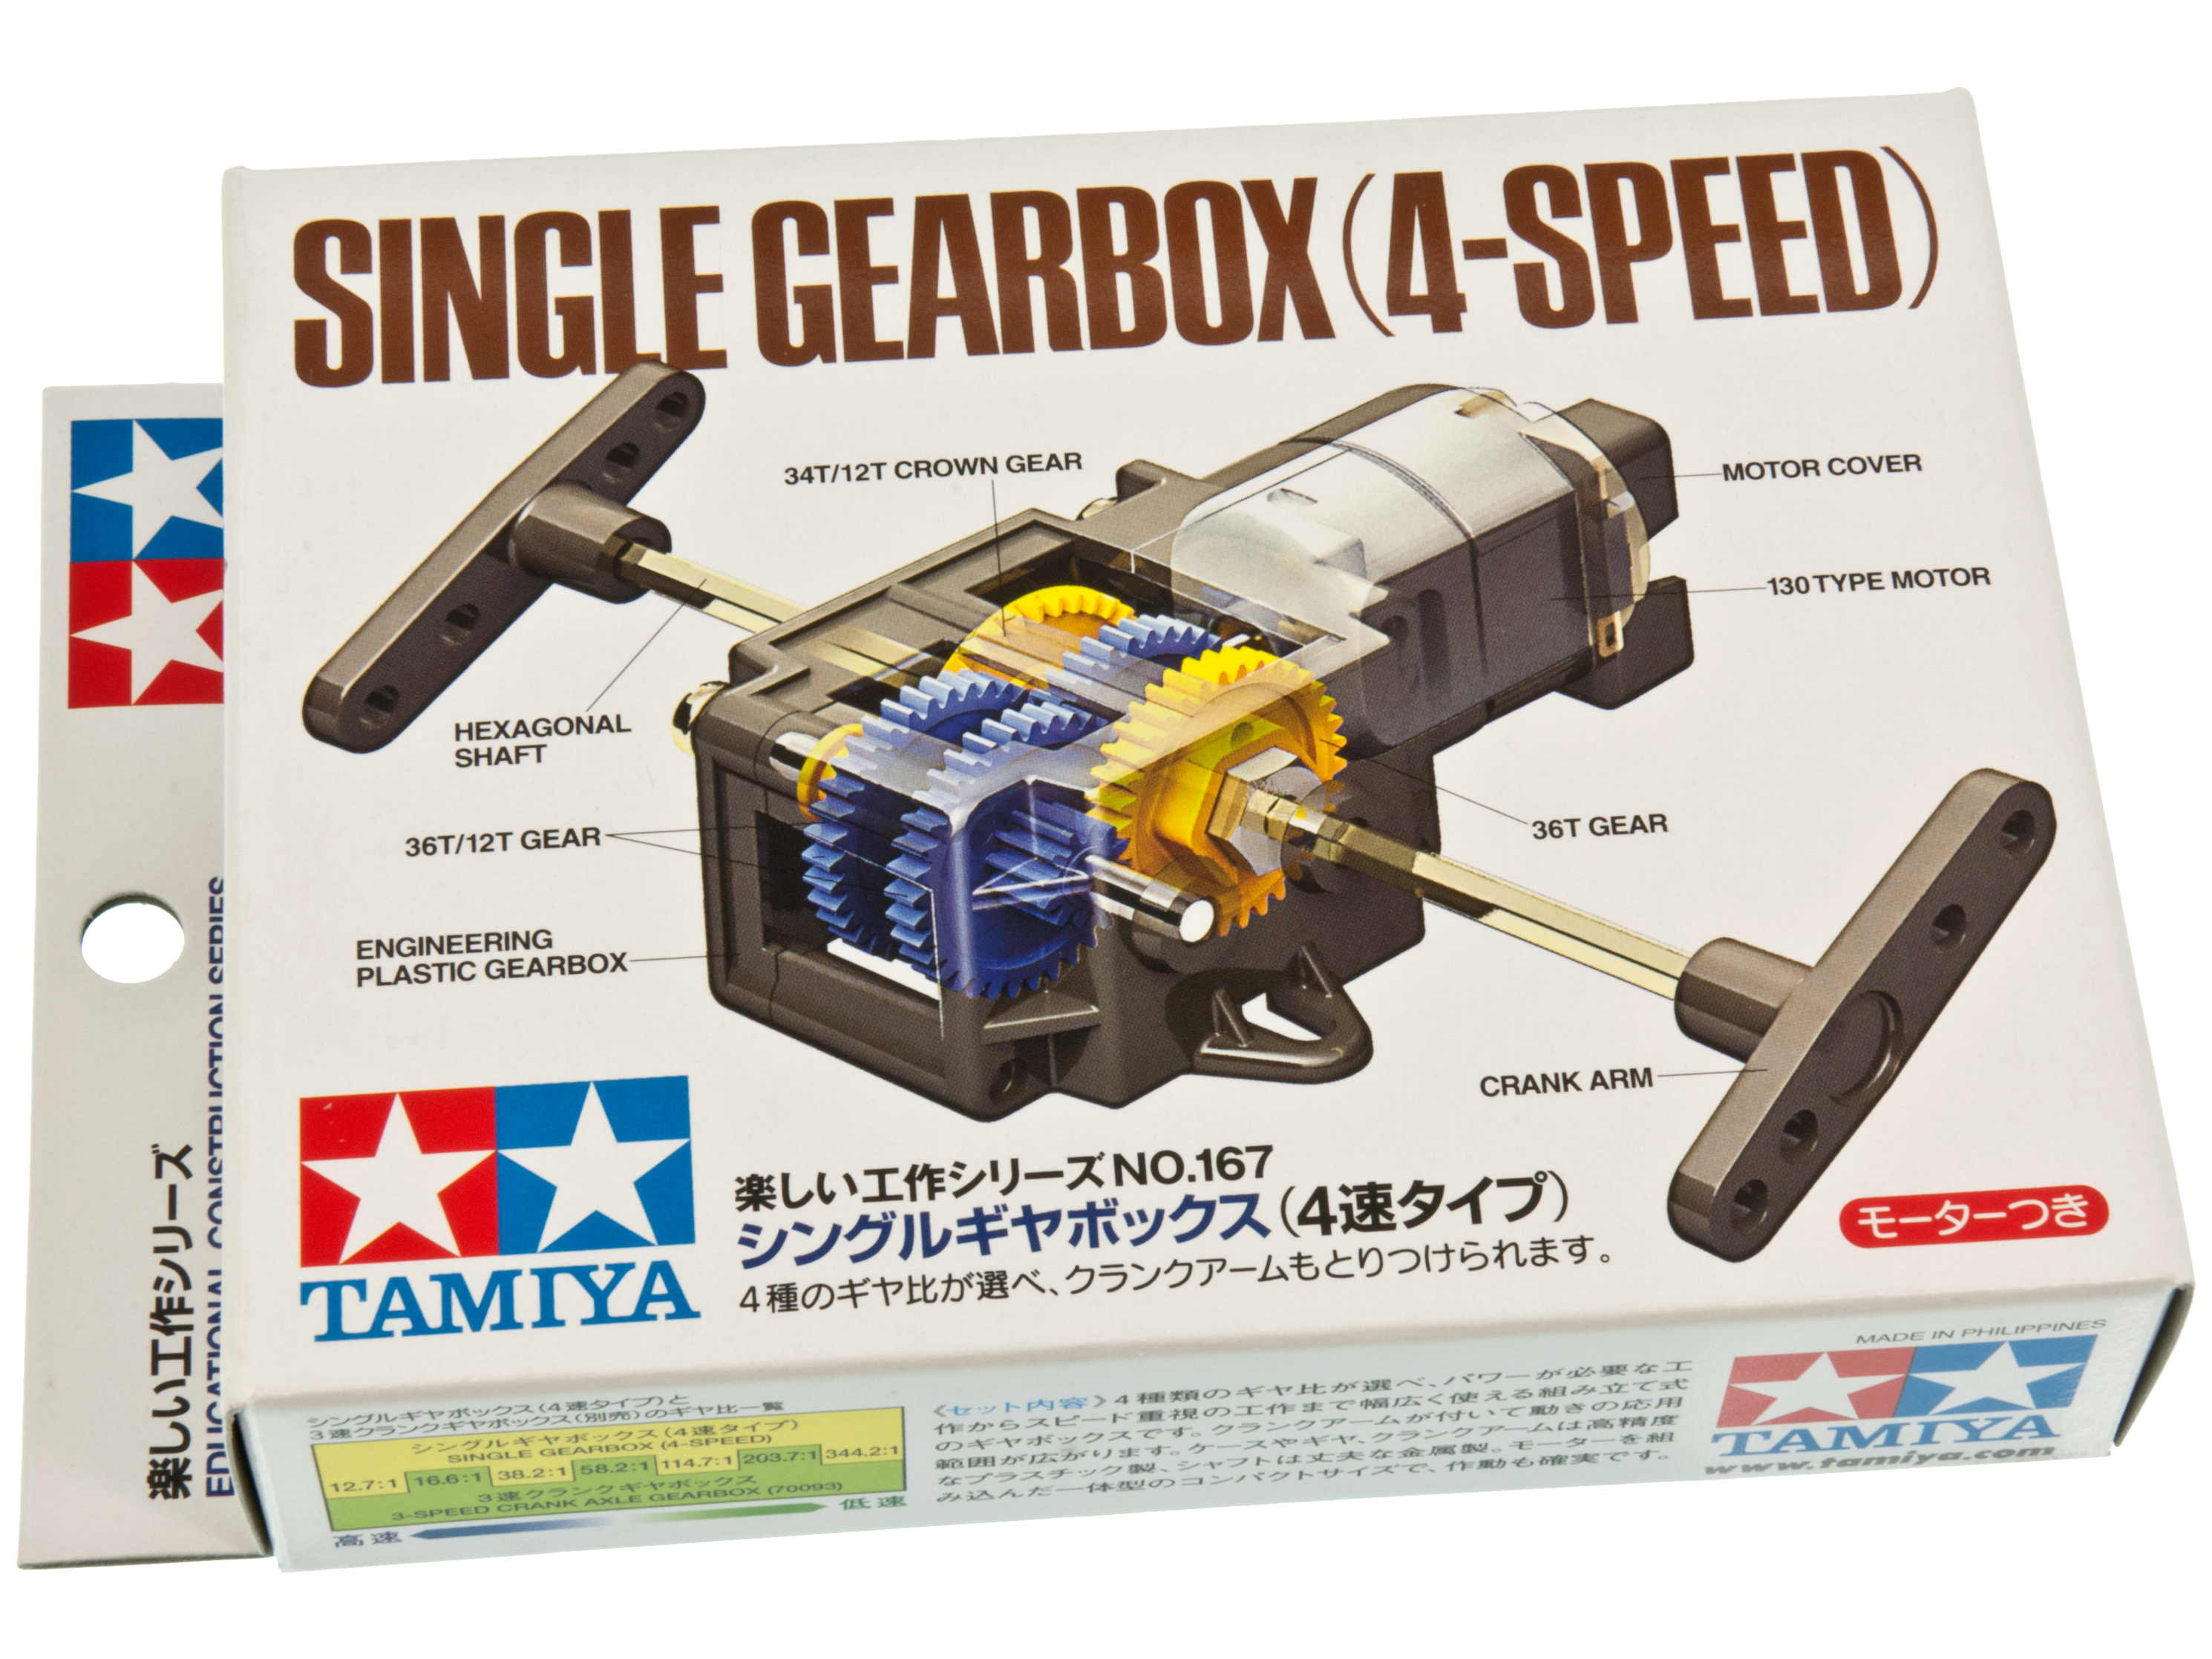 Tamiya Single Gearbox (4-speed) @ electrokit